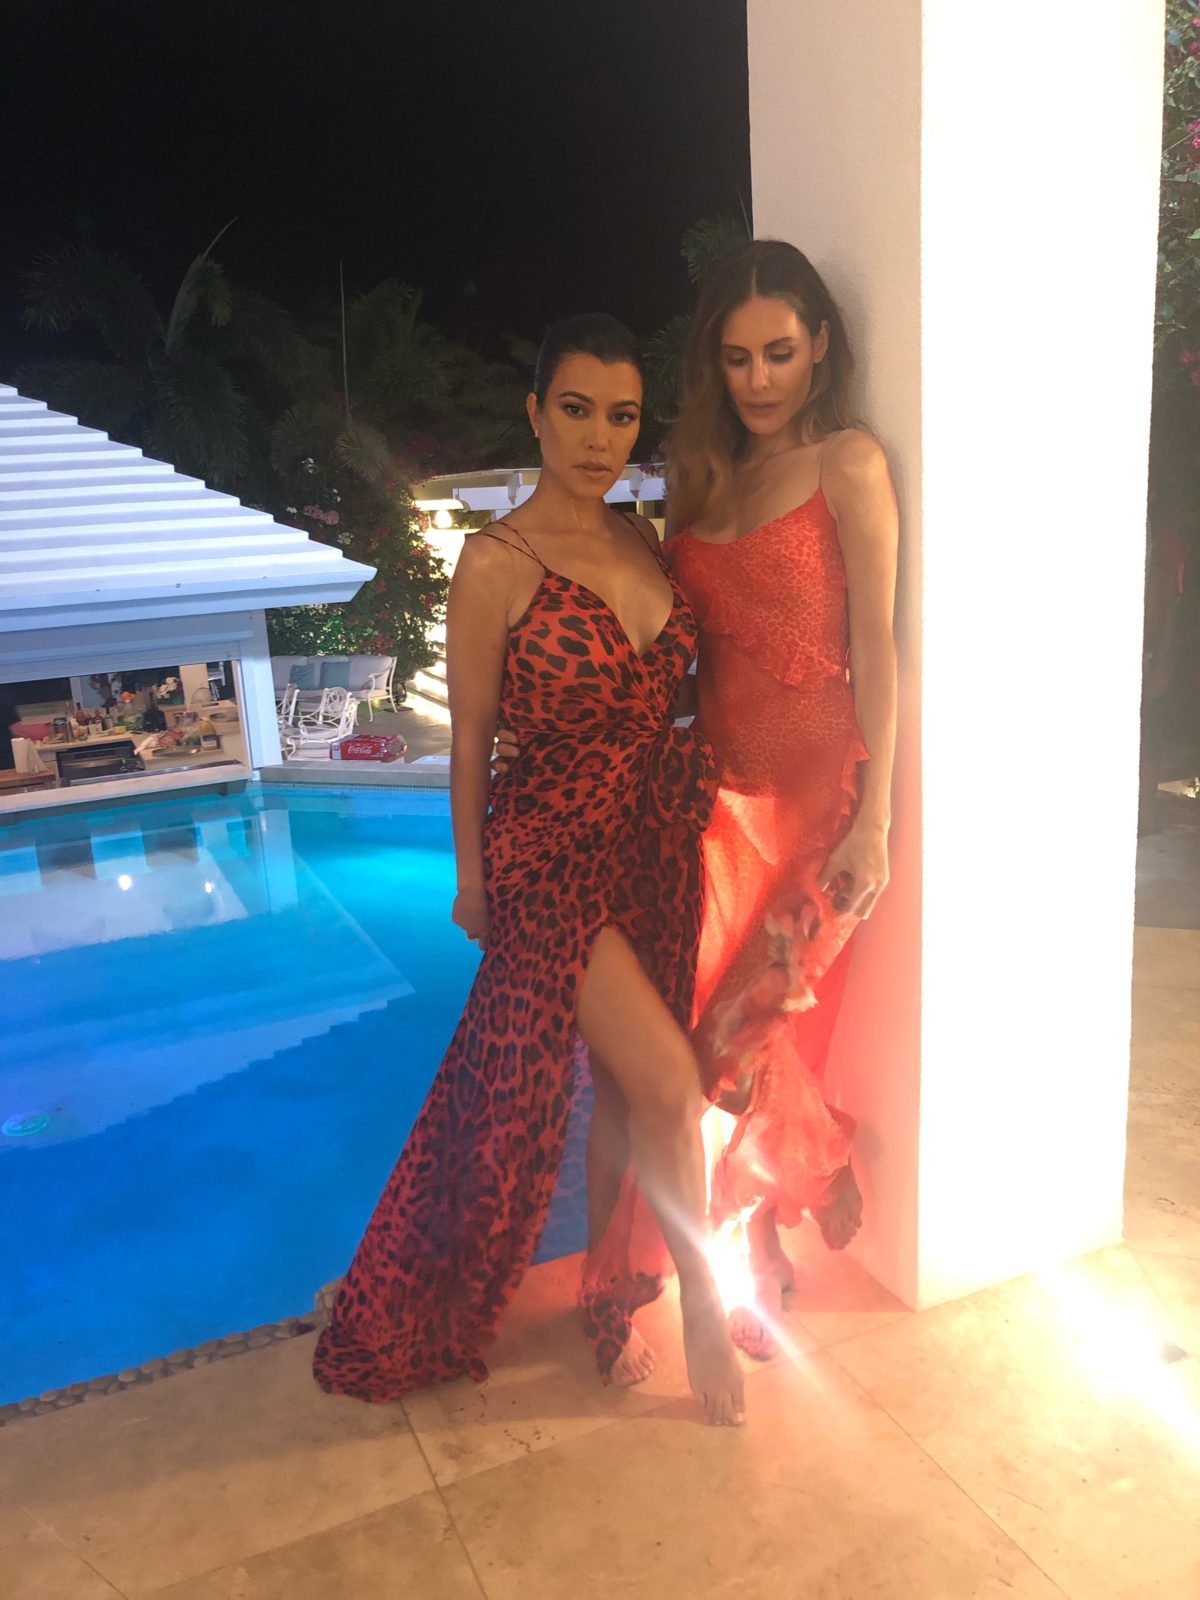 Kourtney Kardashian and friend wearing red dresses